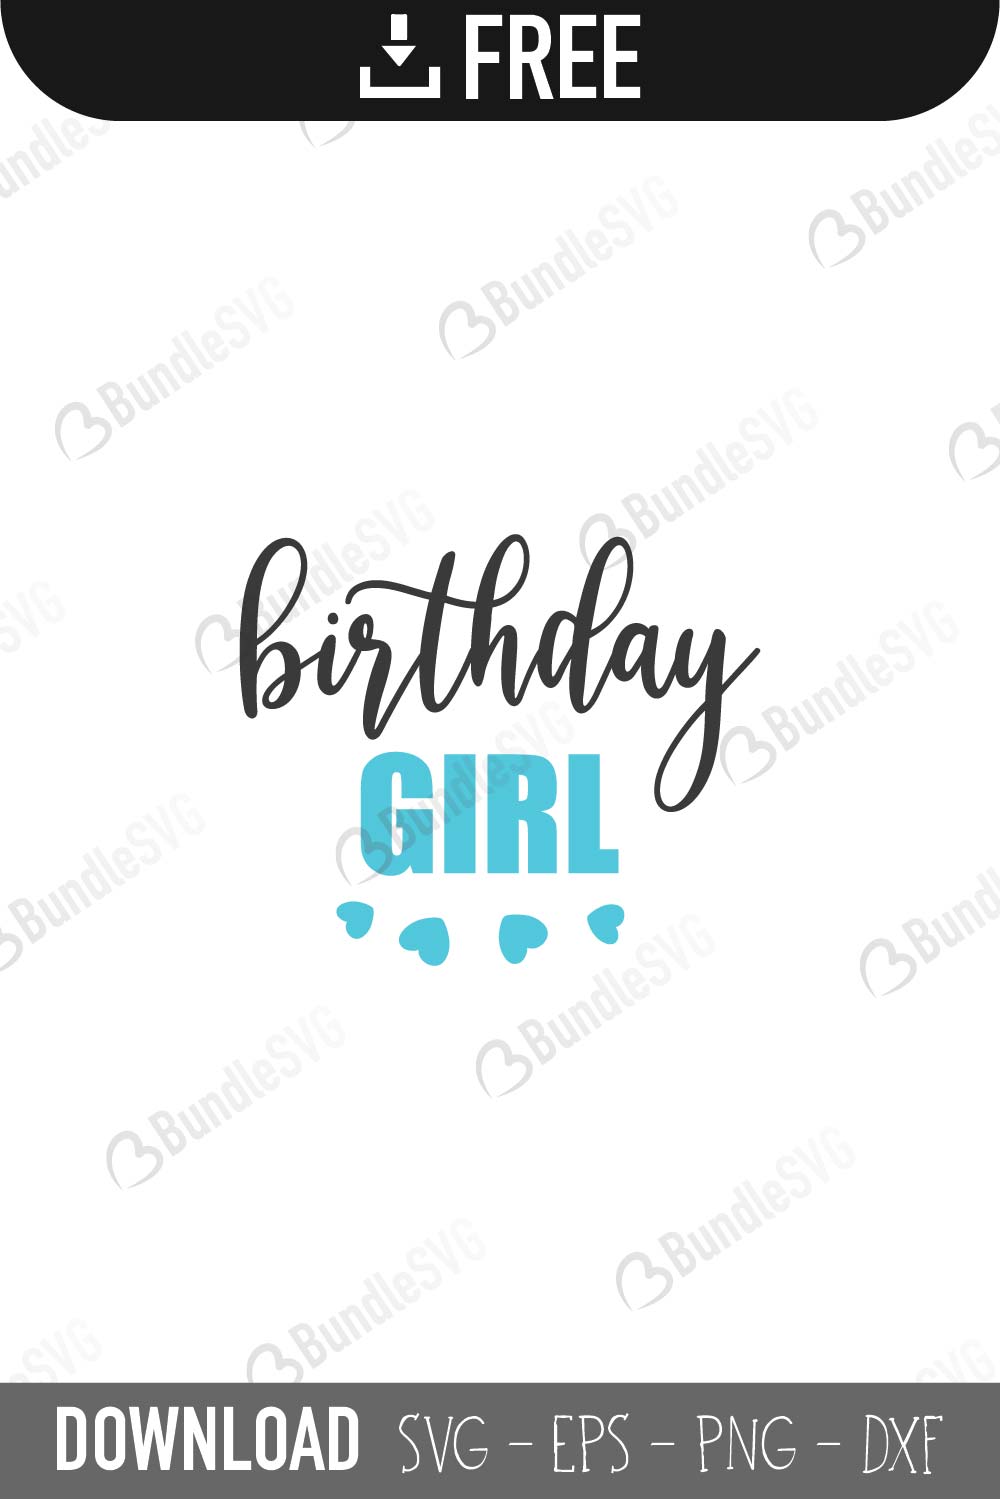 Download Birthday Girl Svg Cut Files Bundlesvg